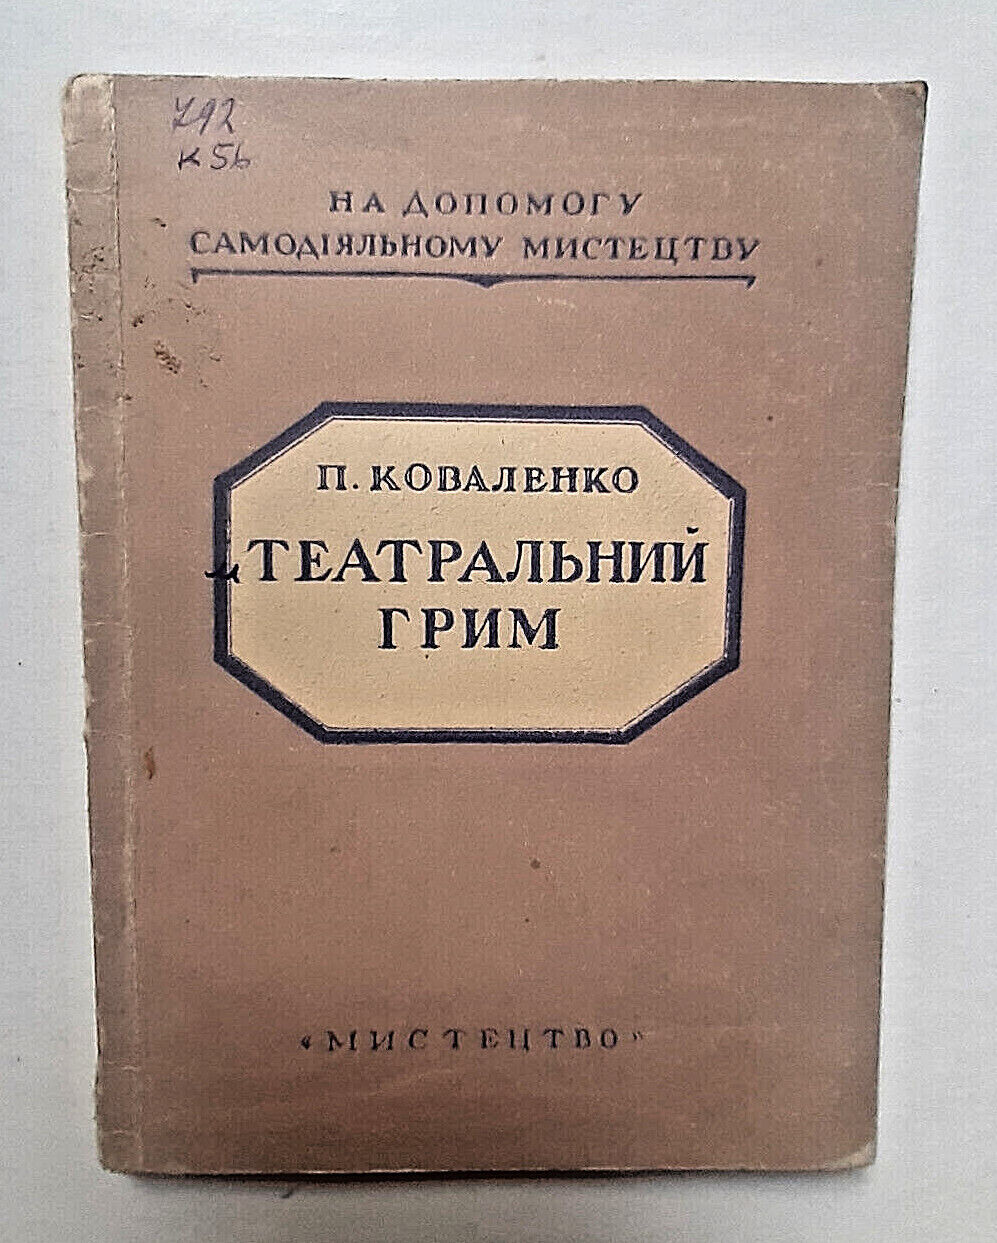 1950 Theatrical Makeup Theater Soviet Russian Vintage Book in Ukrainian Rare